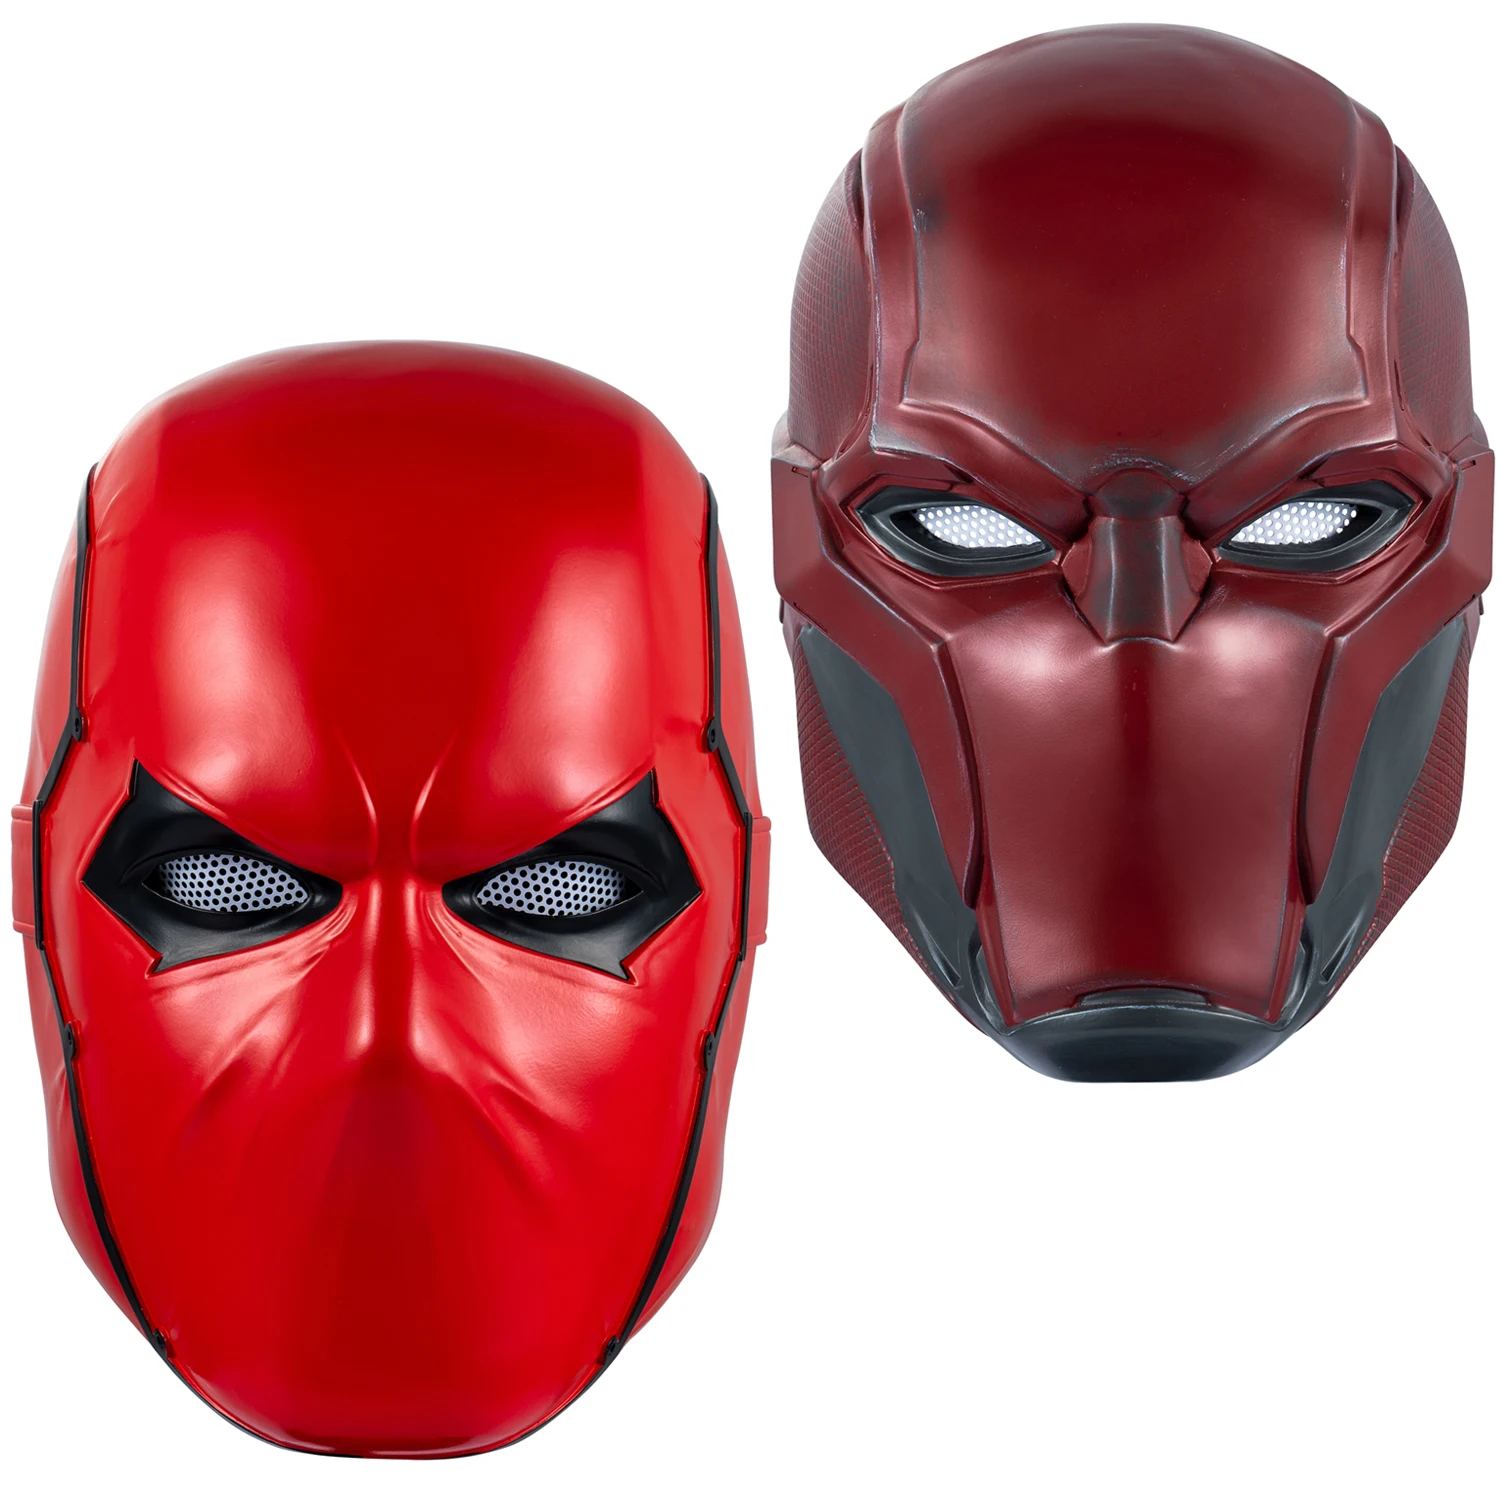 

Movie Red Hood Mask Adult Unisex Jason Todd Cosplay Resin Helmet with Mesh Eye Masks Props Halloween Carnival Costume